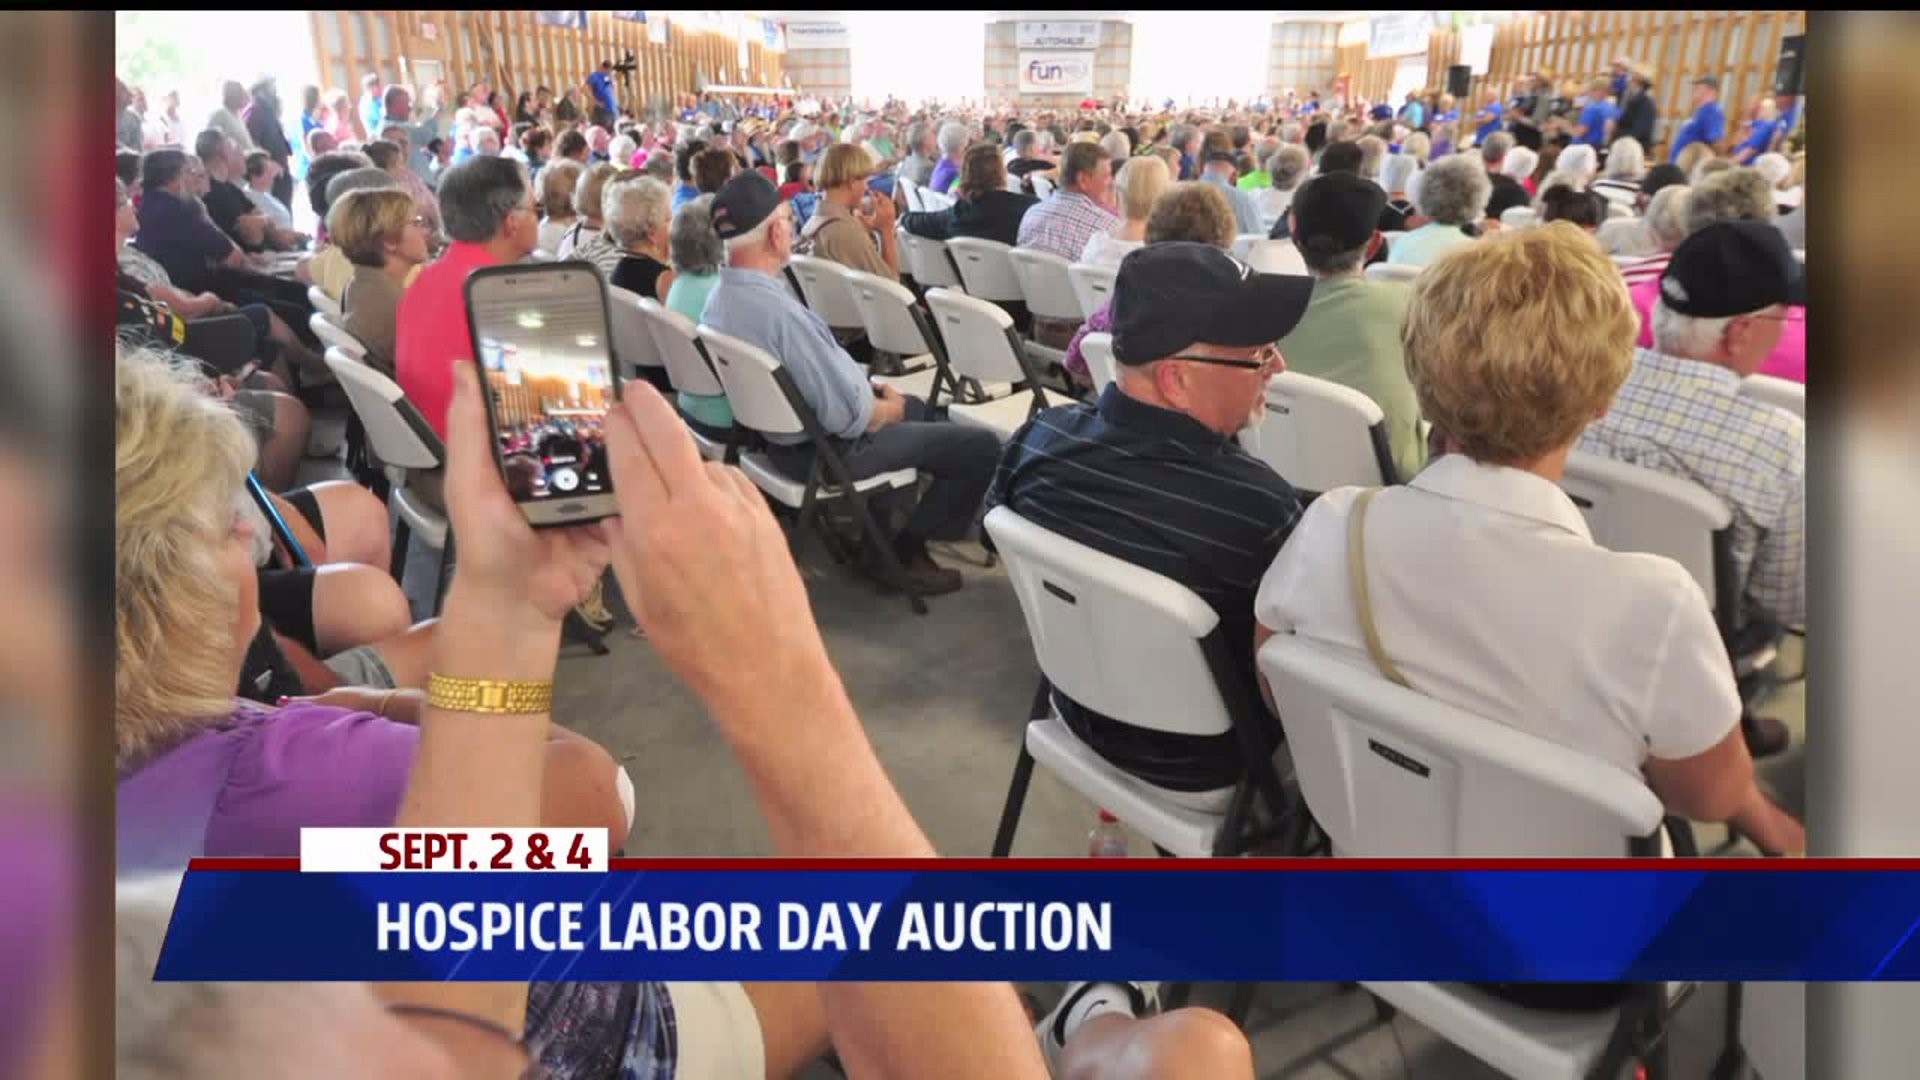 Labor Day Auction benefits Hospice & Community Care patients